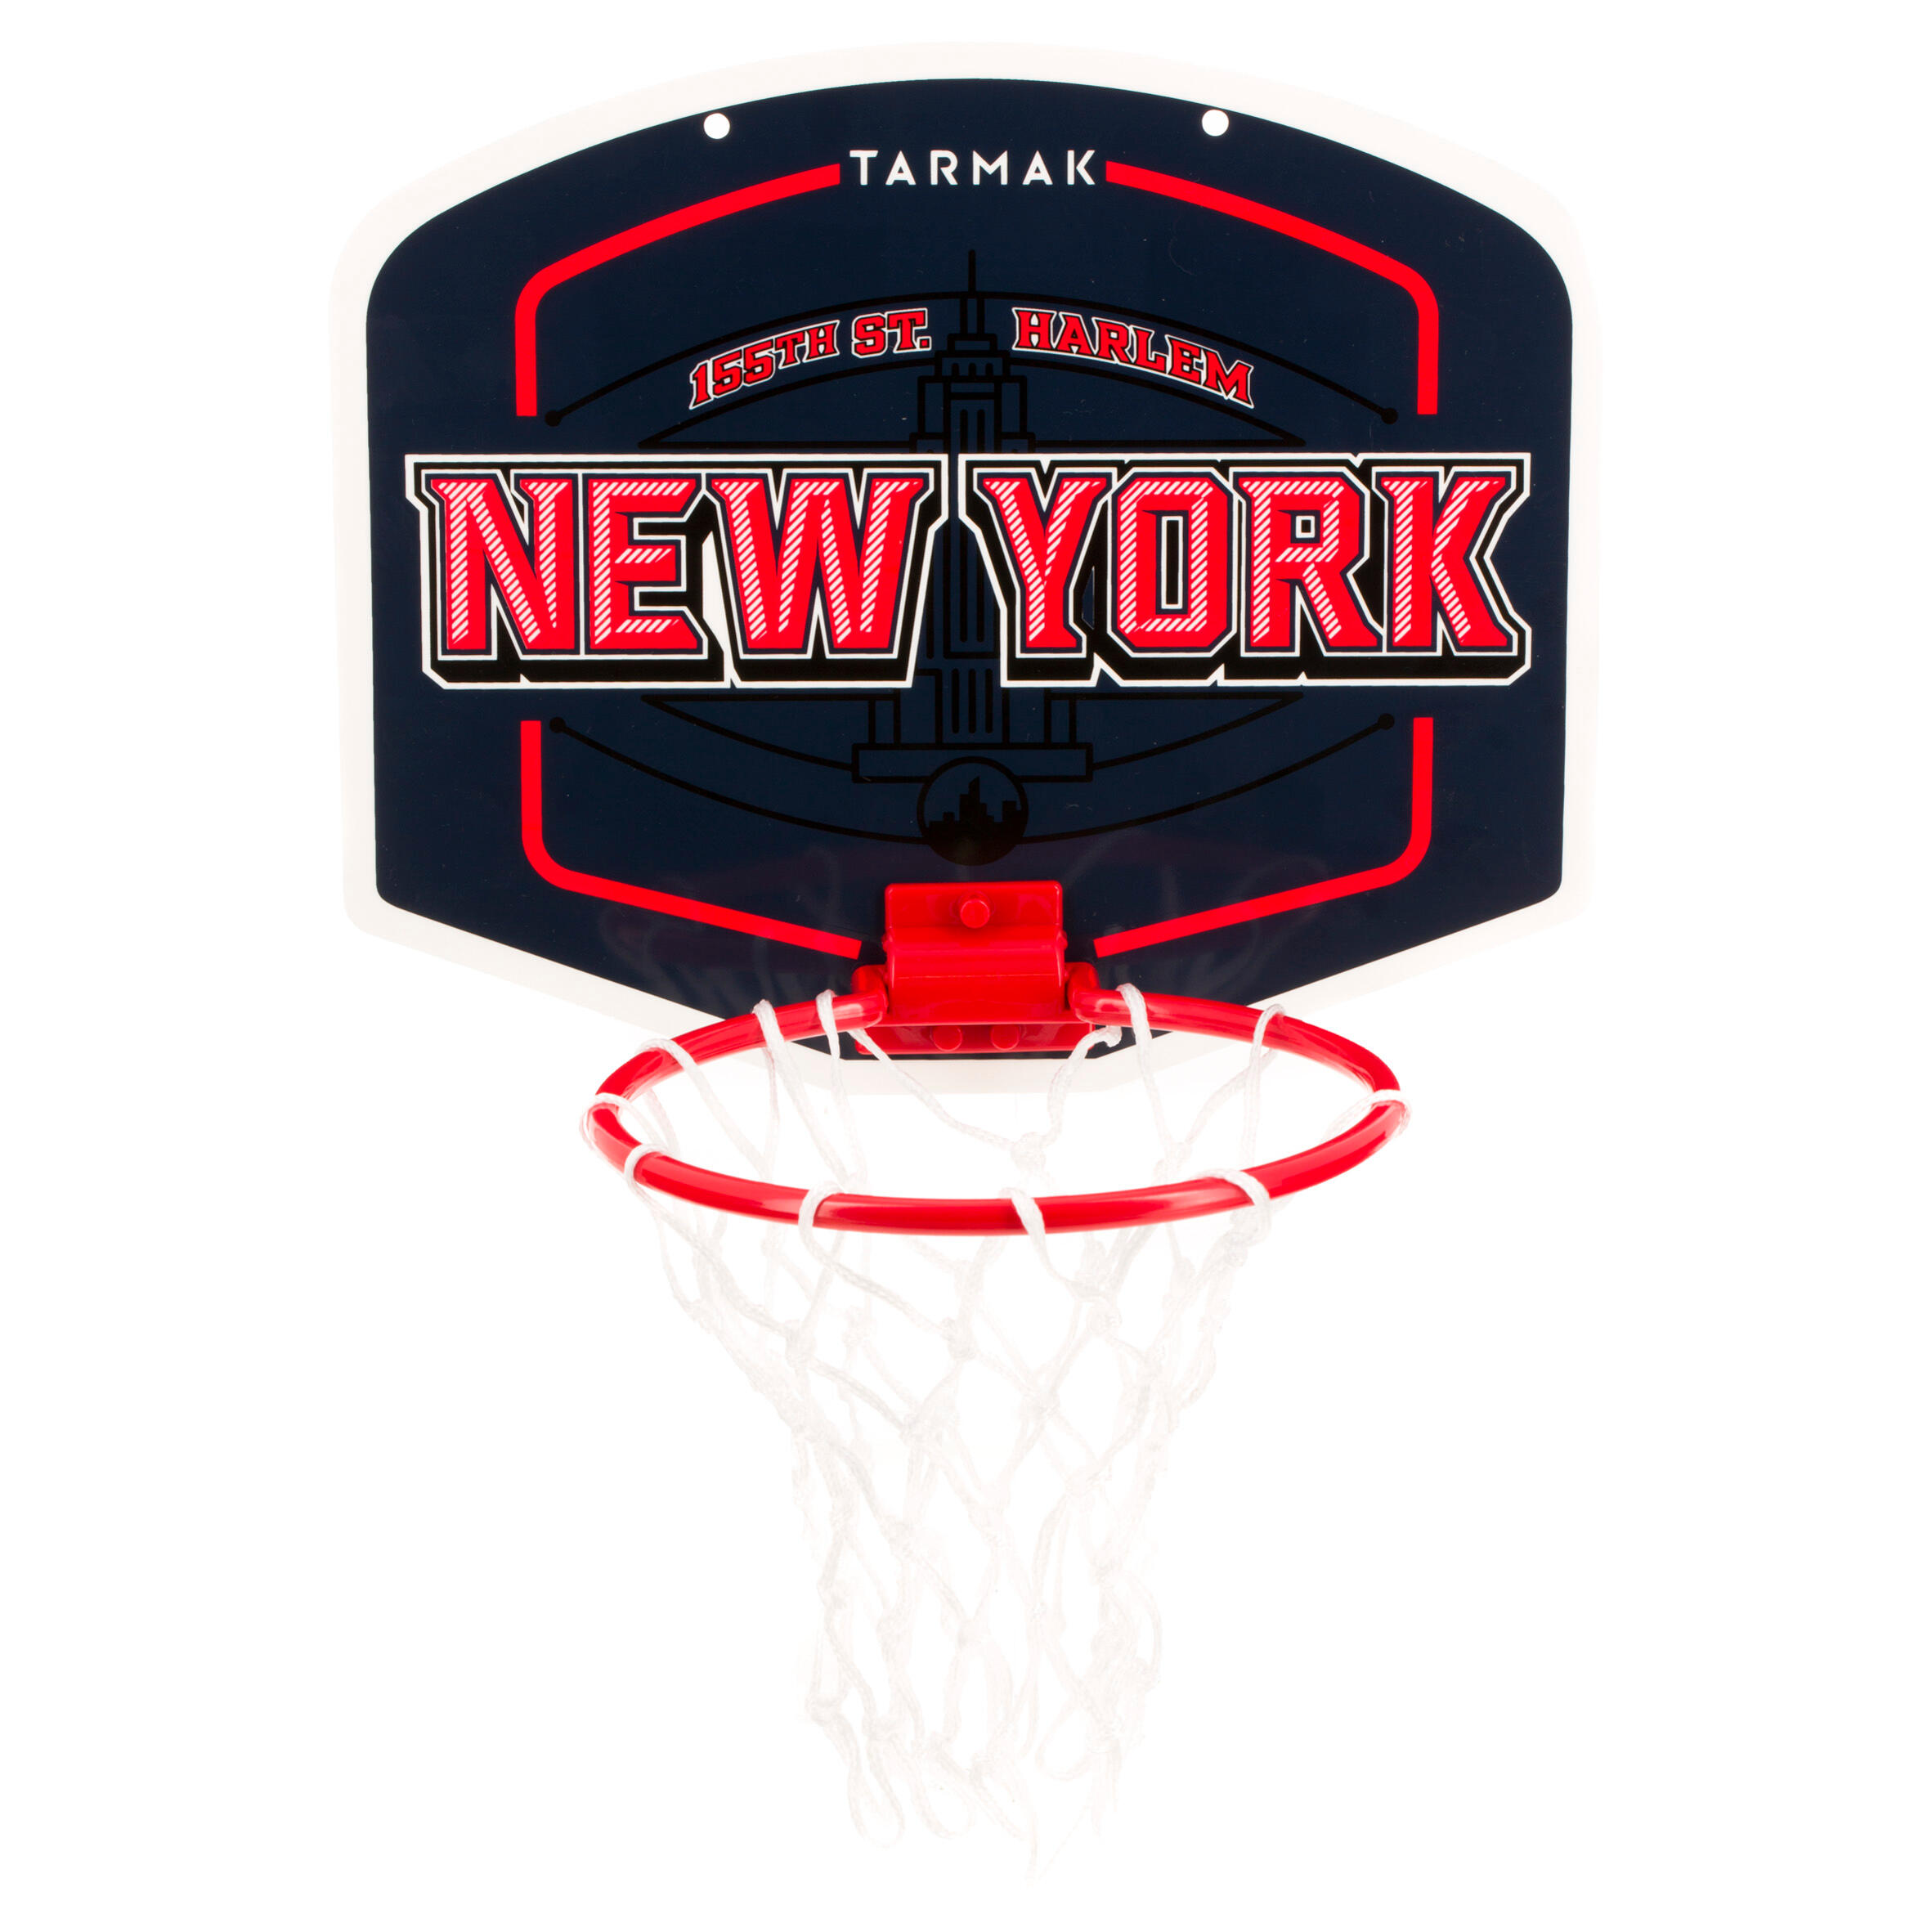 TARMAK Mini B New York Set Kids'/Adult Mini Basketball Set - BlueBall included. 